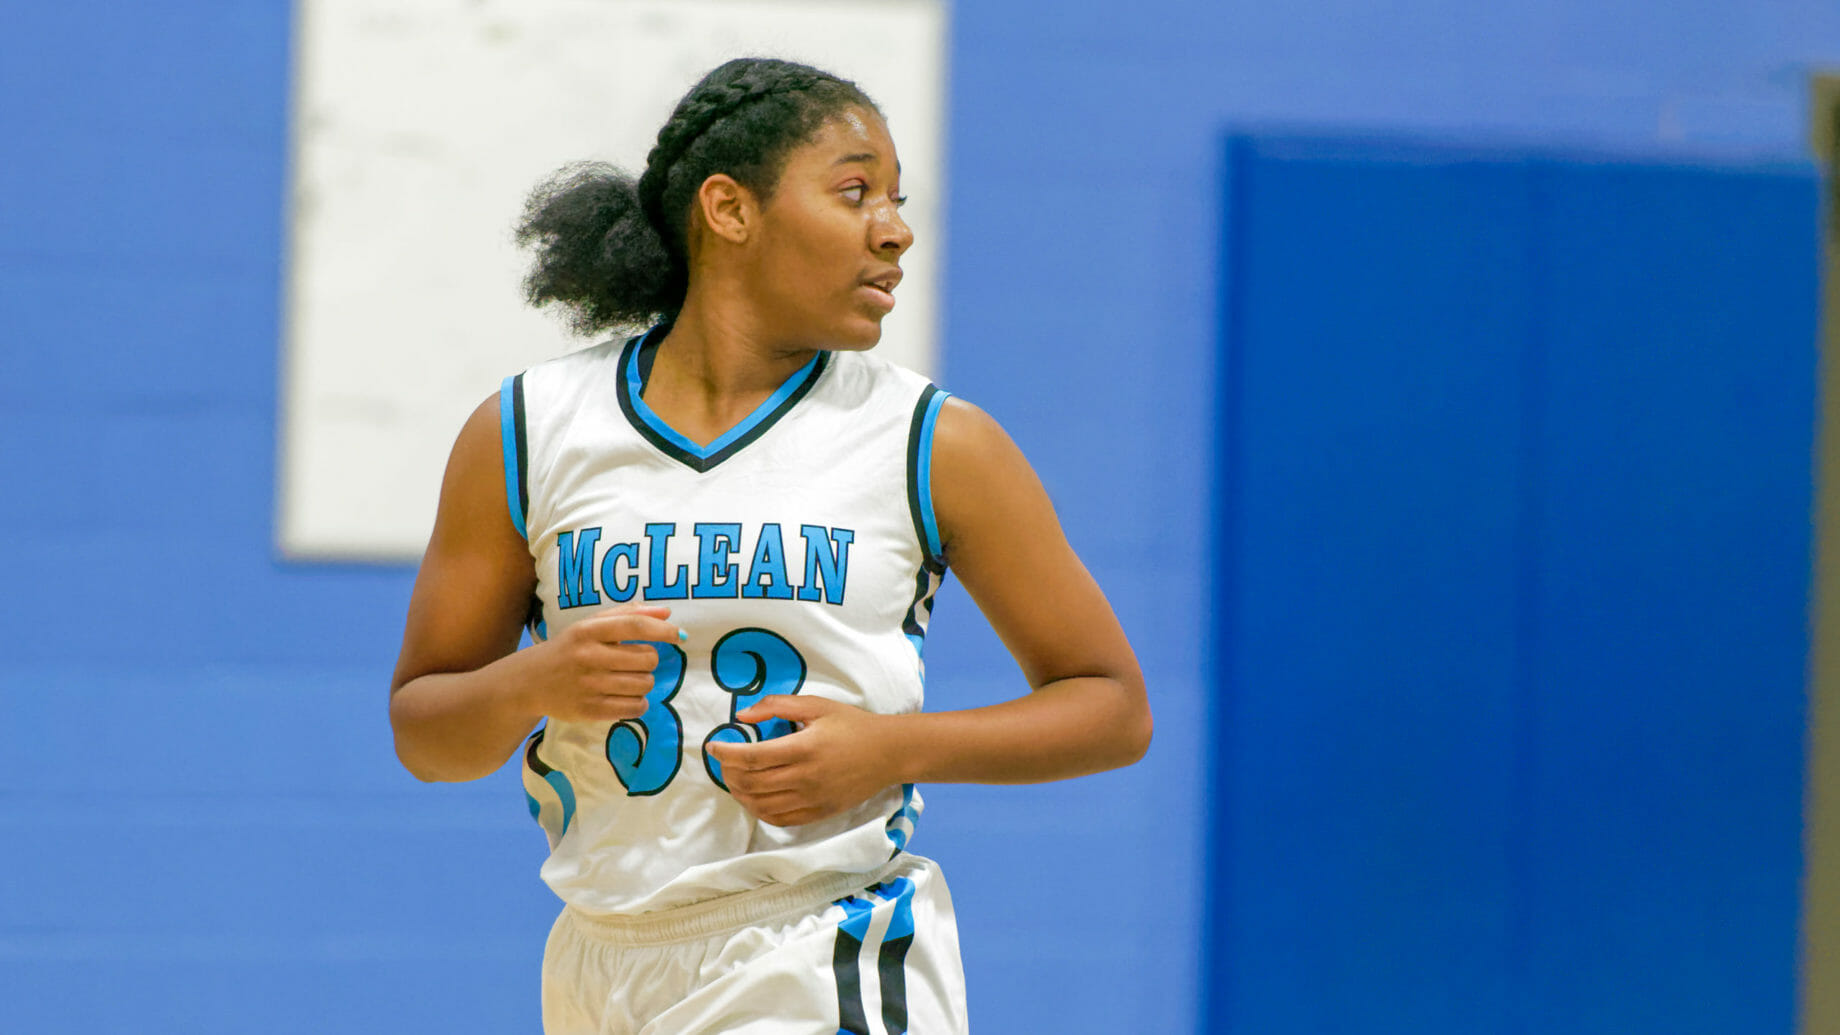 McLean Girl's Basketball Player